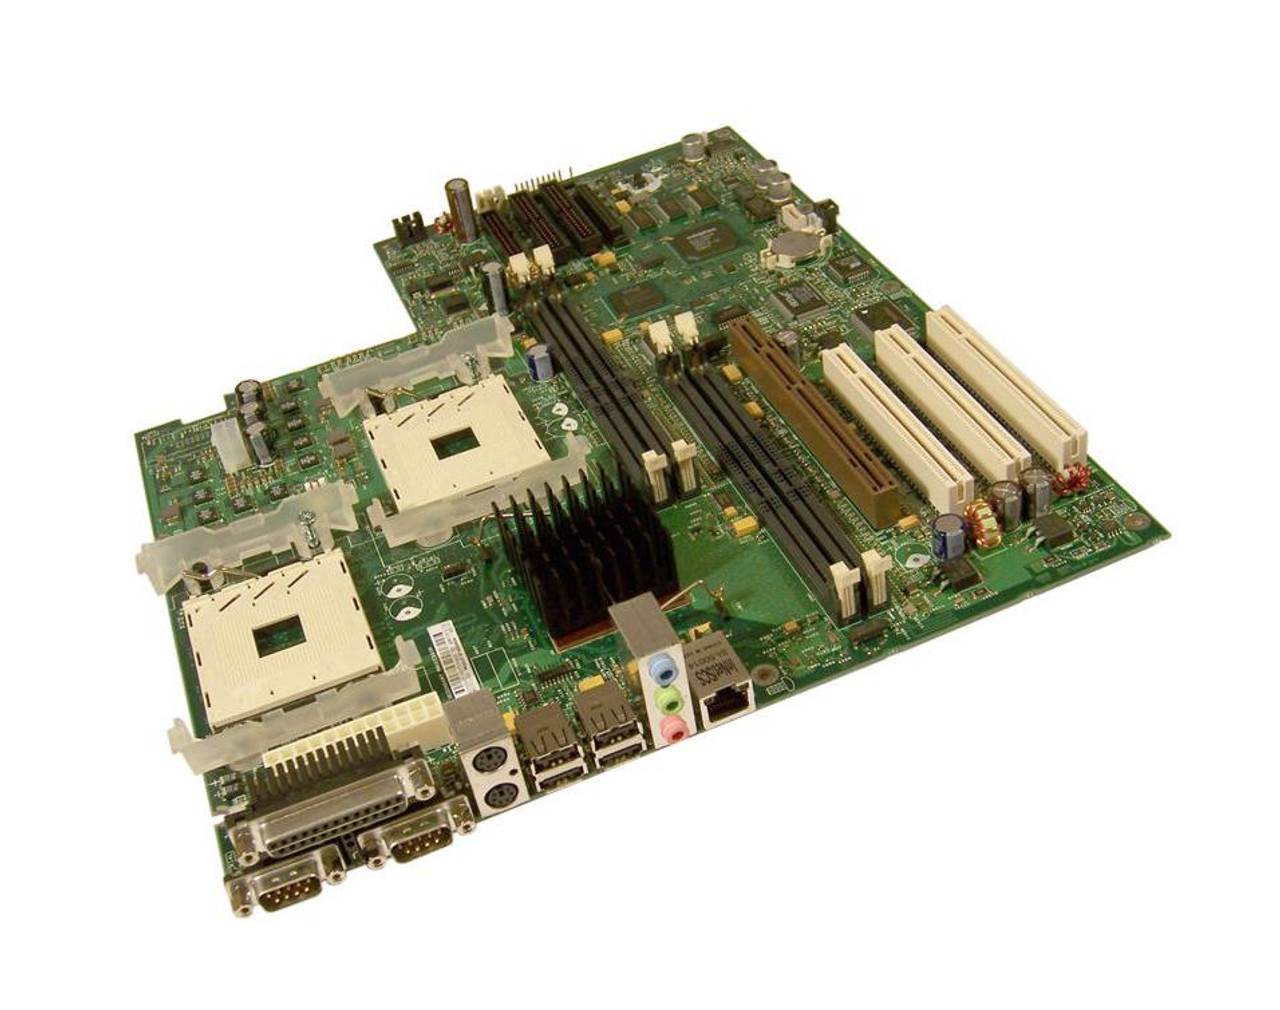 010912-101 Compaq System Board (Motherboard) for Evo W6000 (Refurbished)